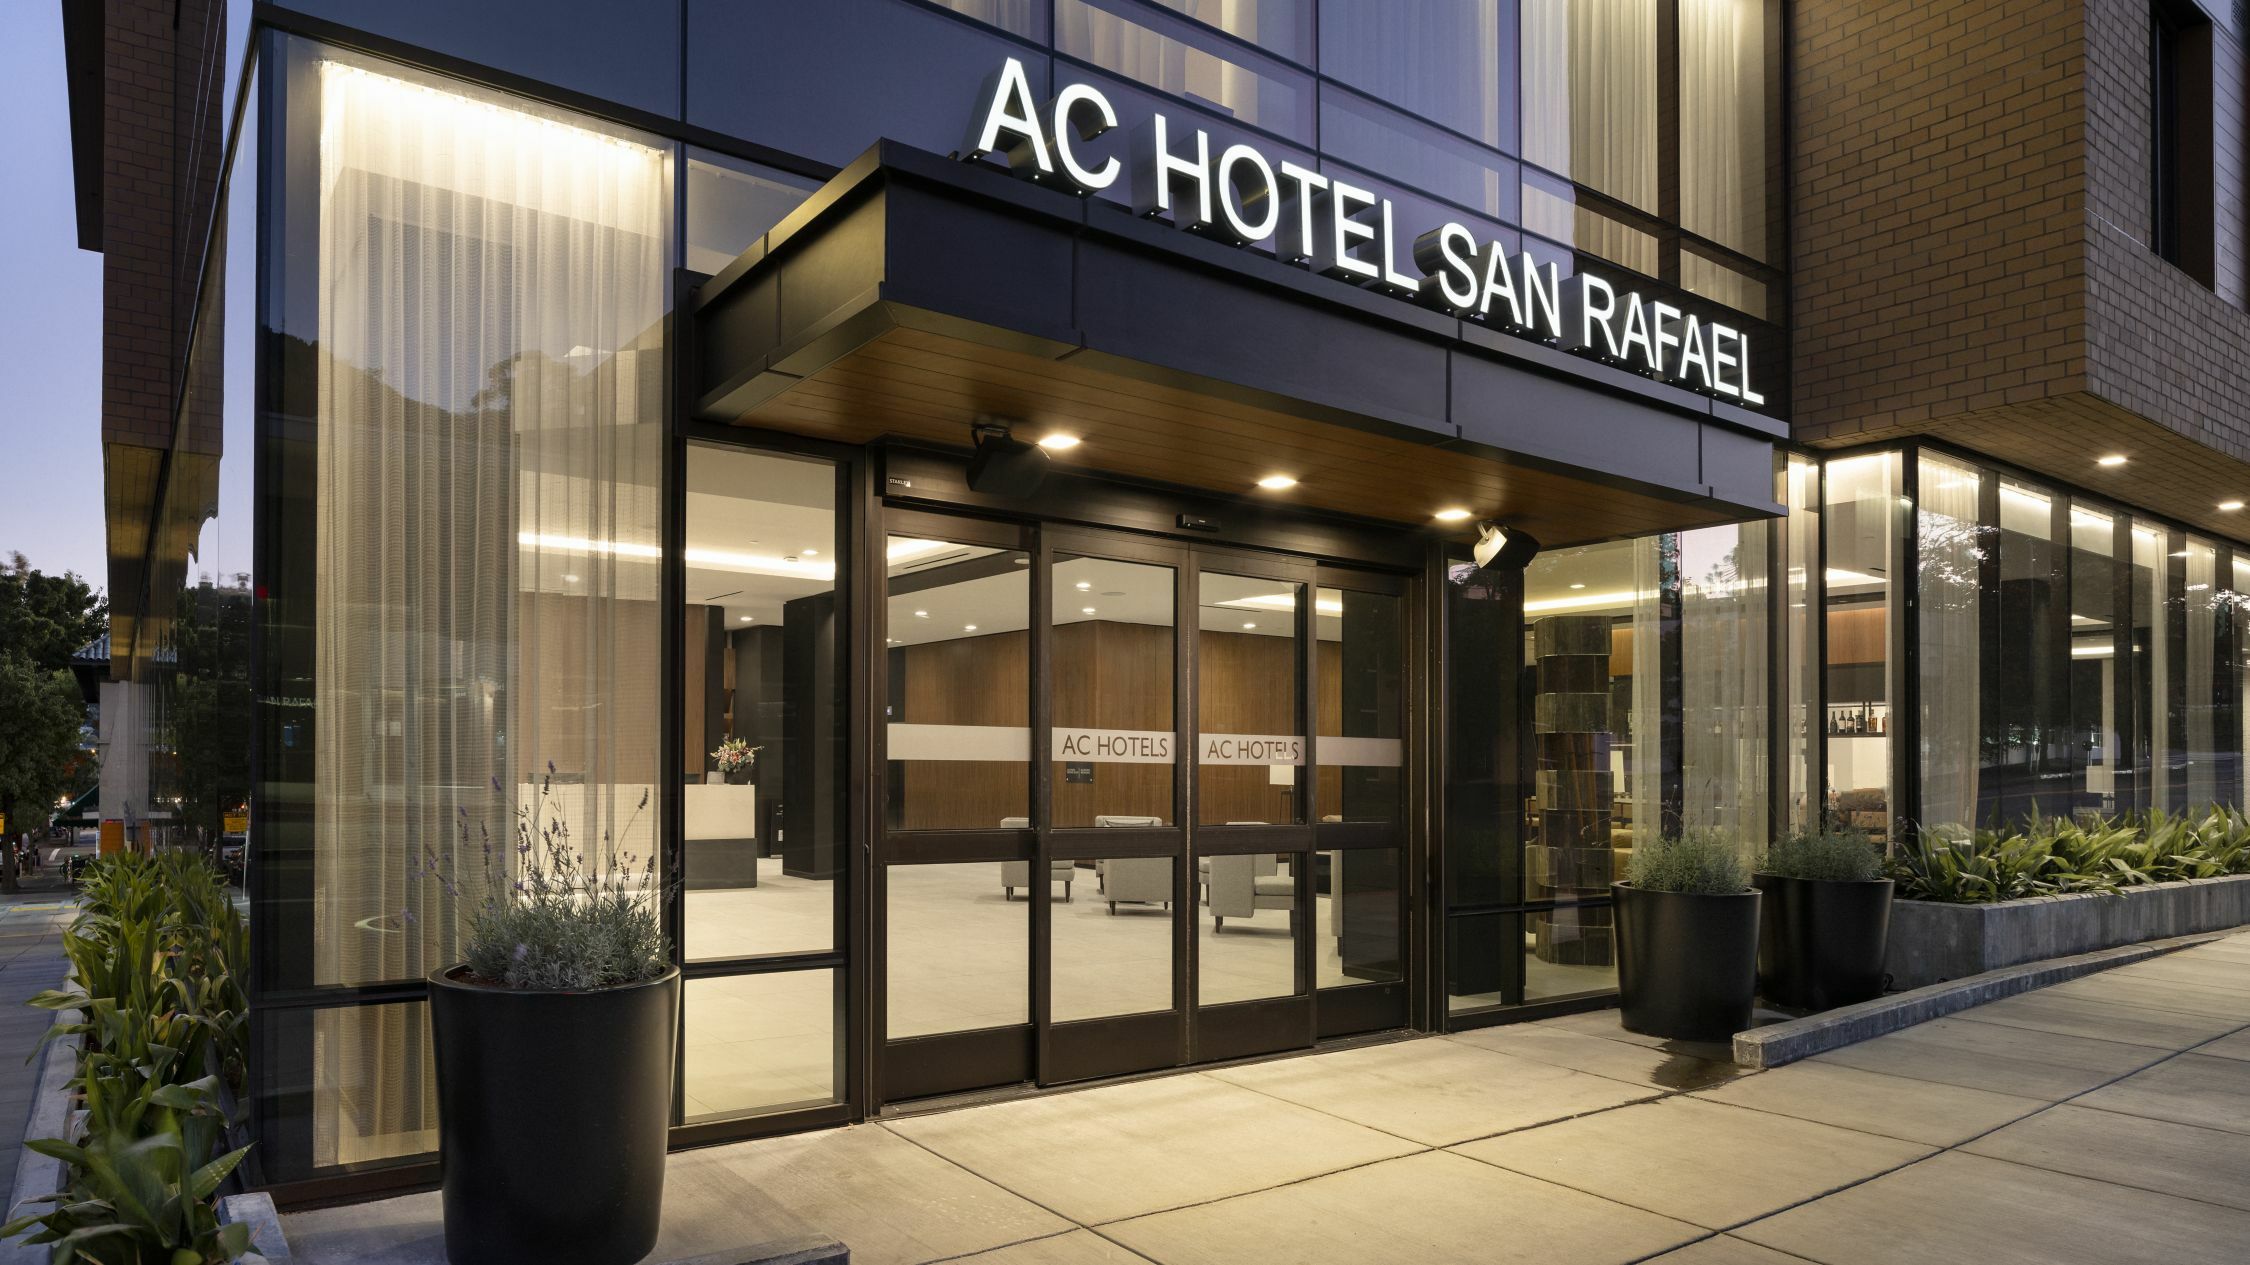 Photo of AC Hotel San Rafael, San Rafael, CA